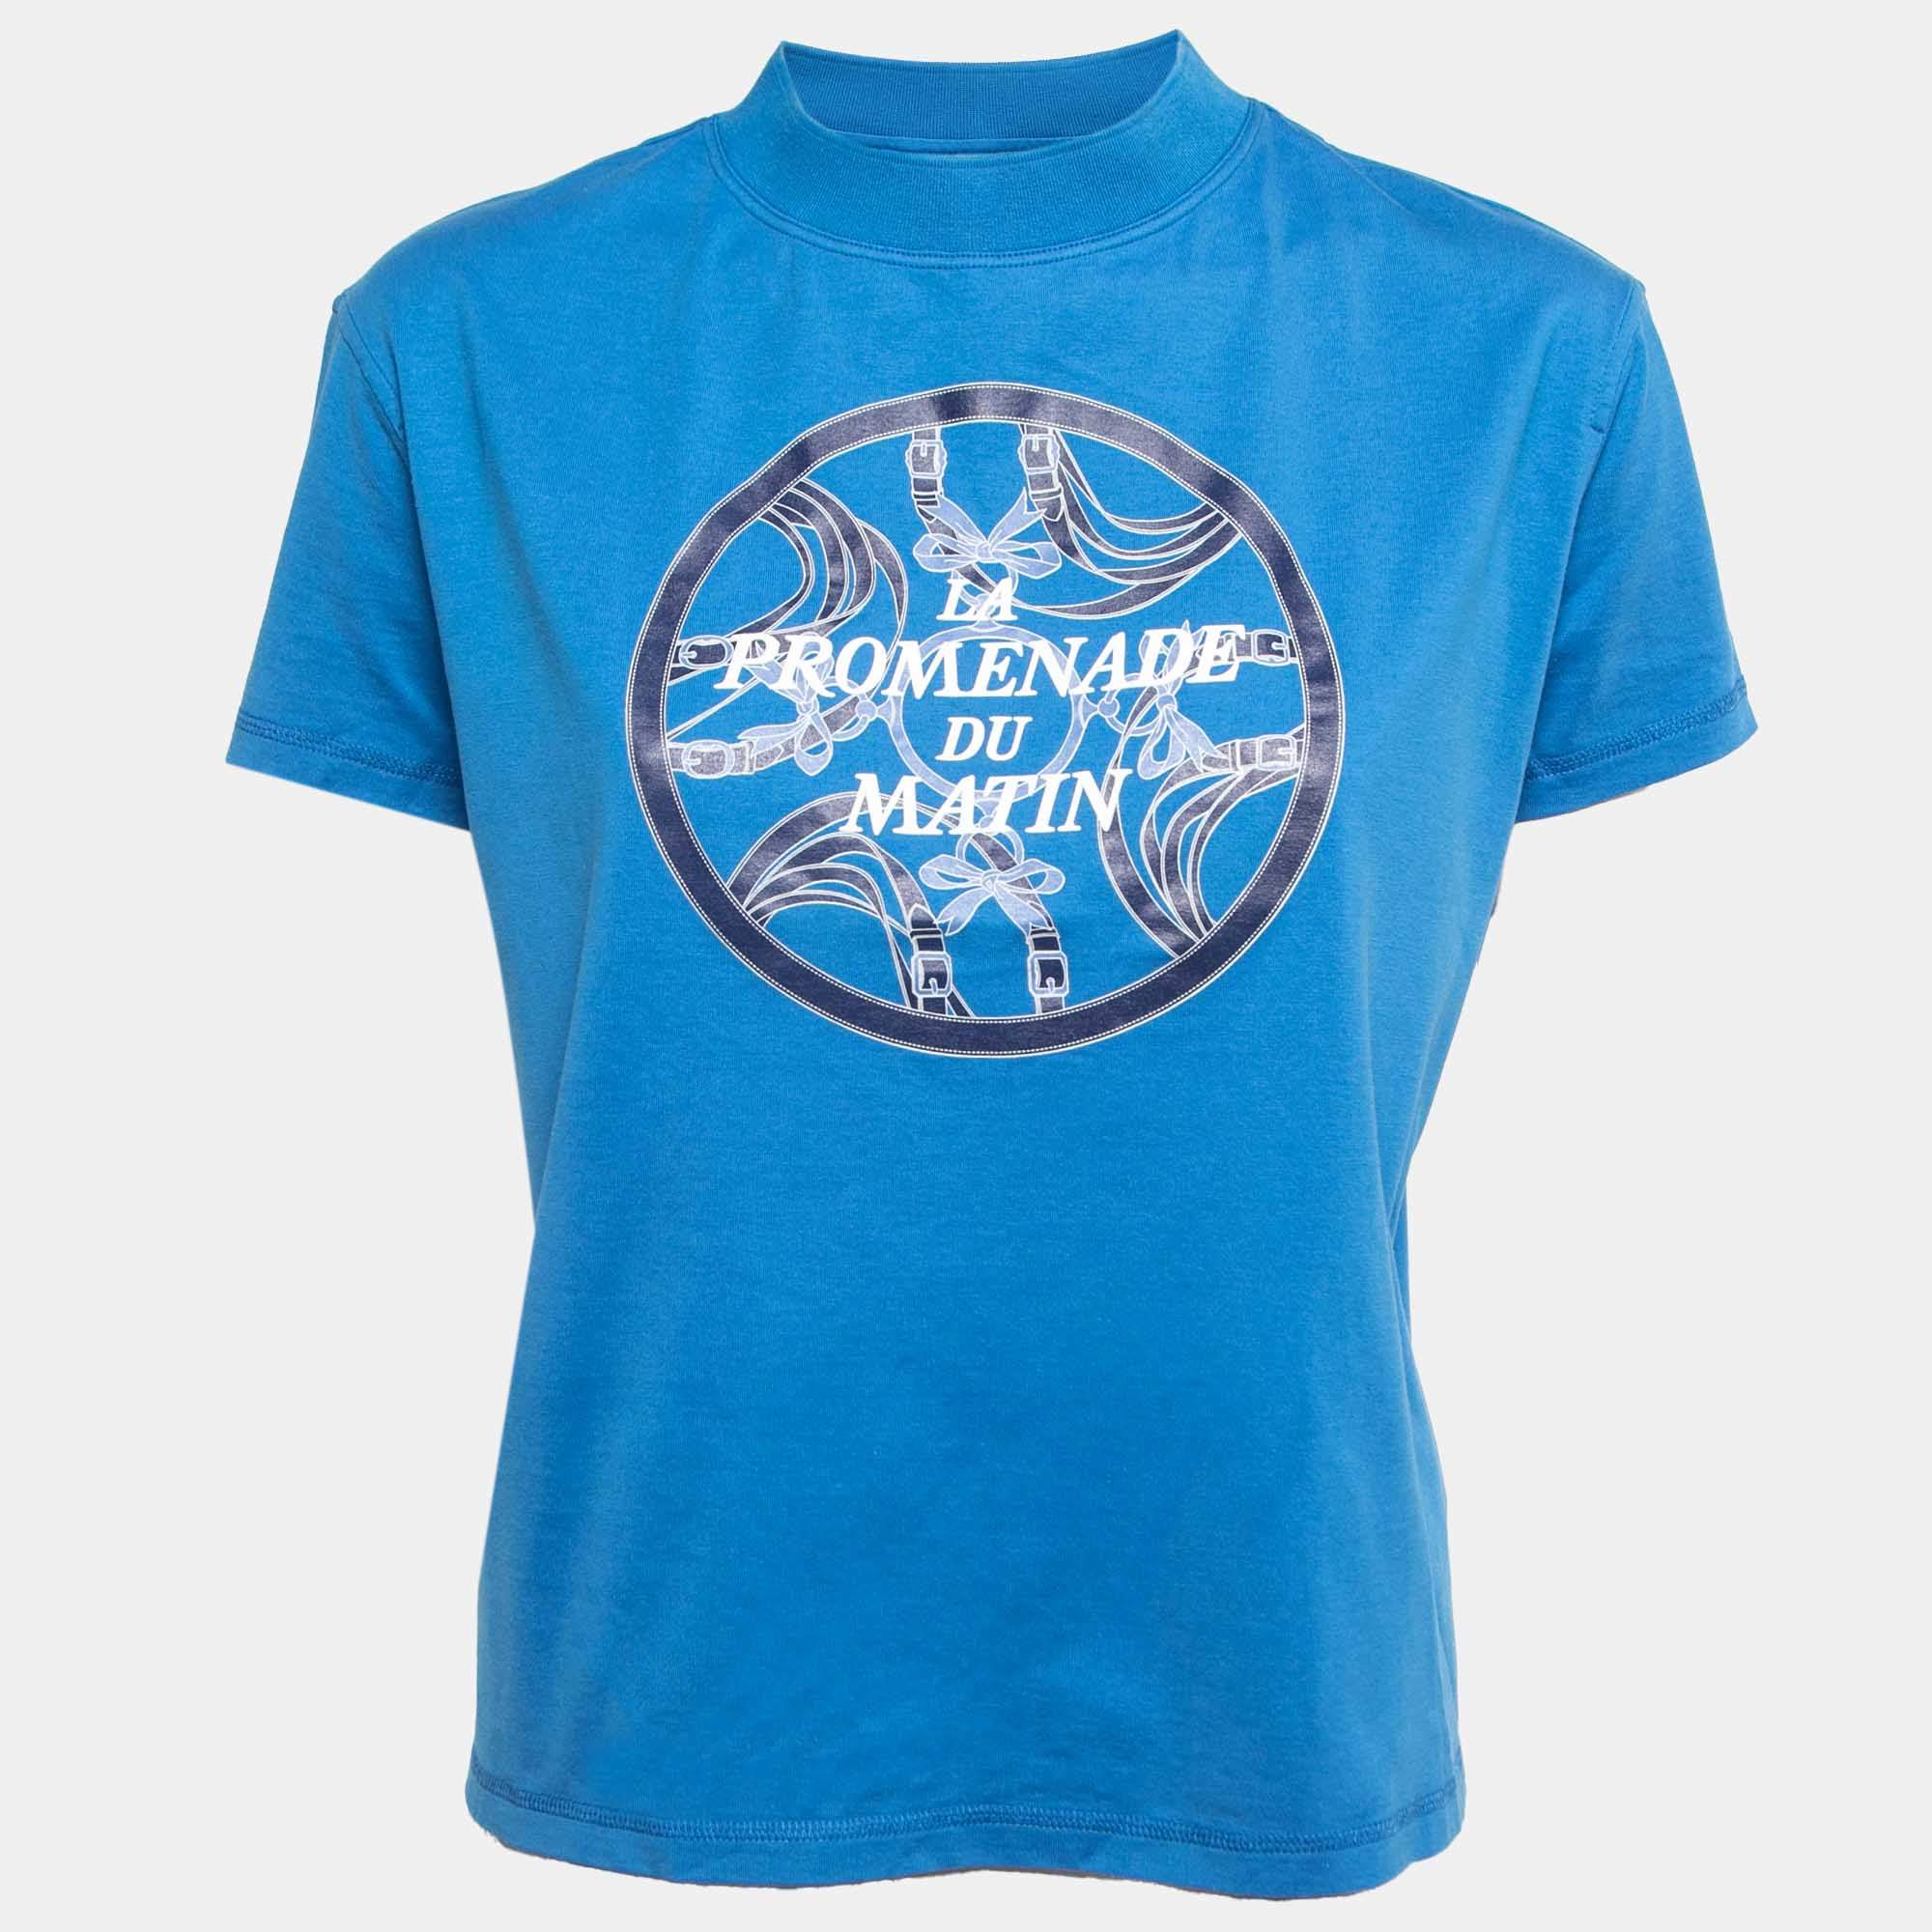 Preloved Women's T-Shirt - Blue - S